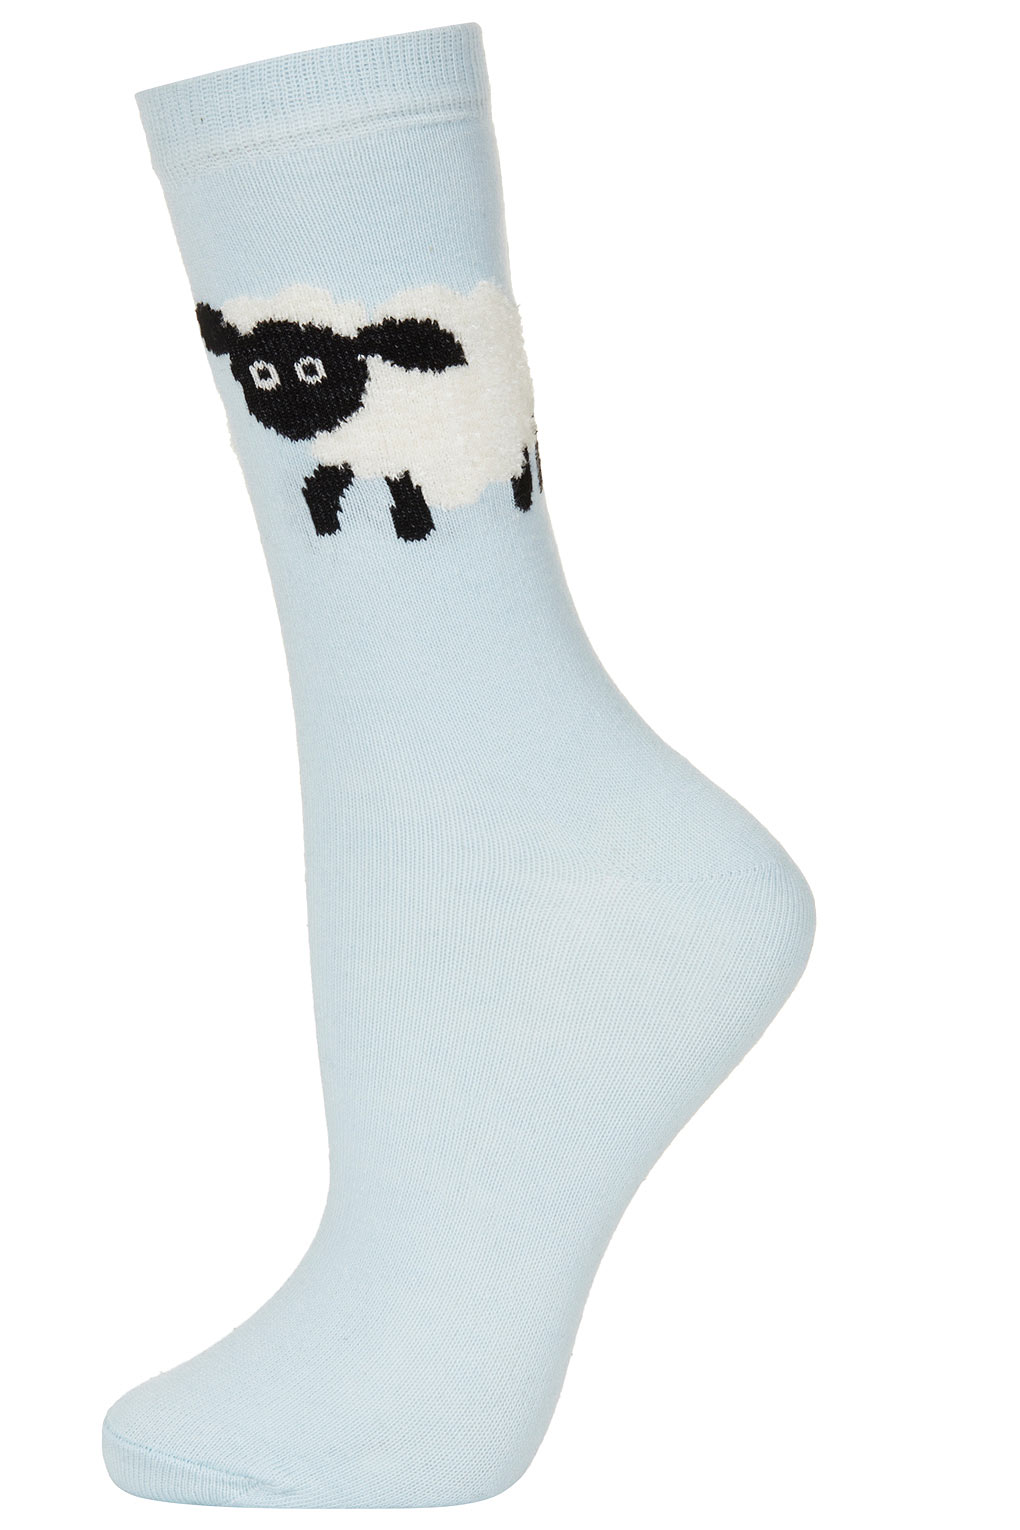 Topshop Big Fluffy Sheep Ankle Socks in Blue | Lyst